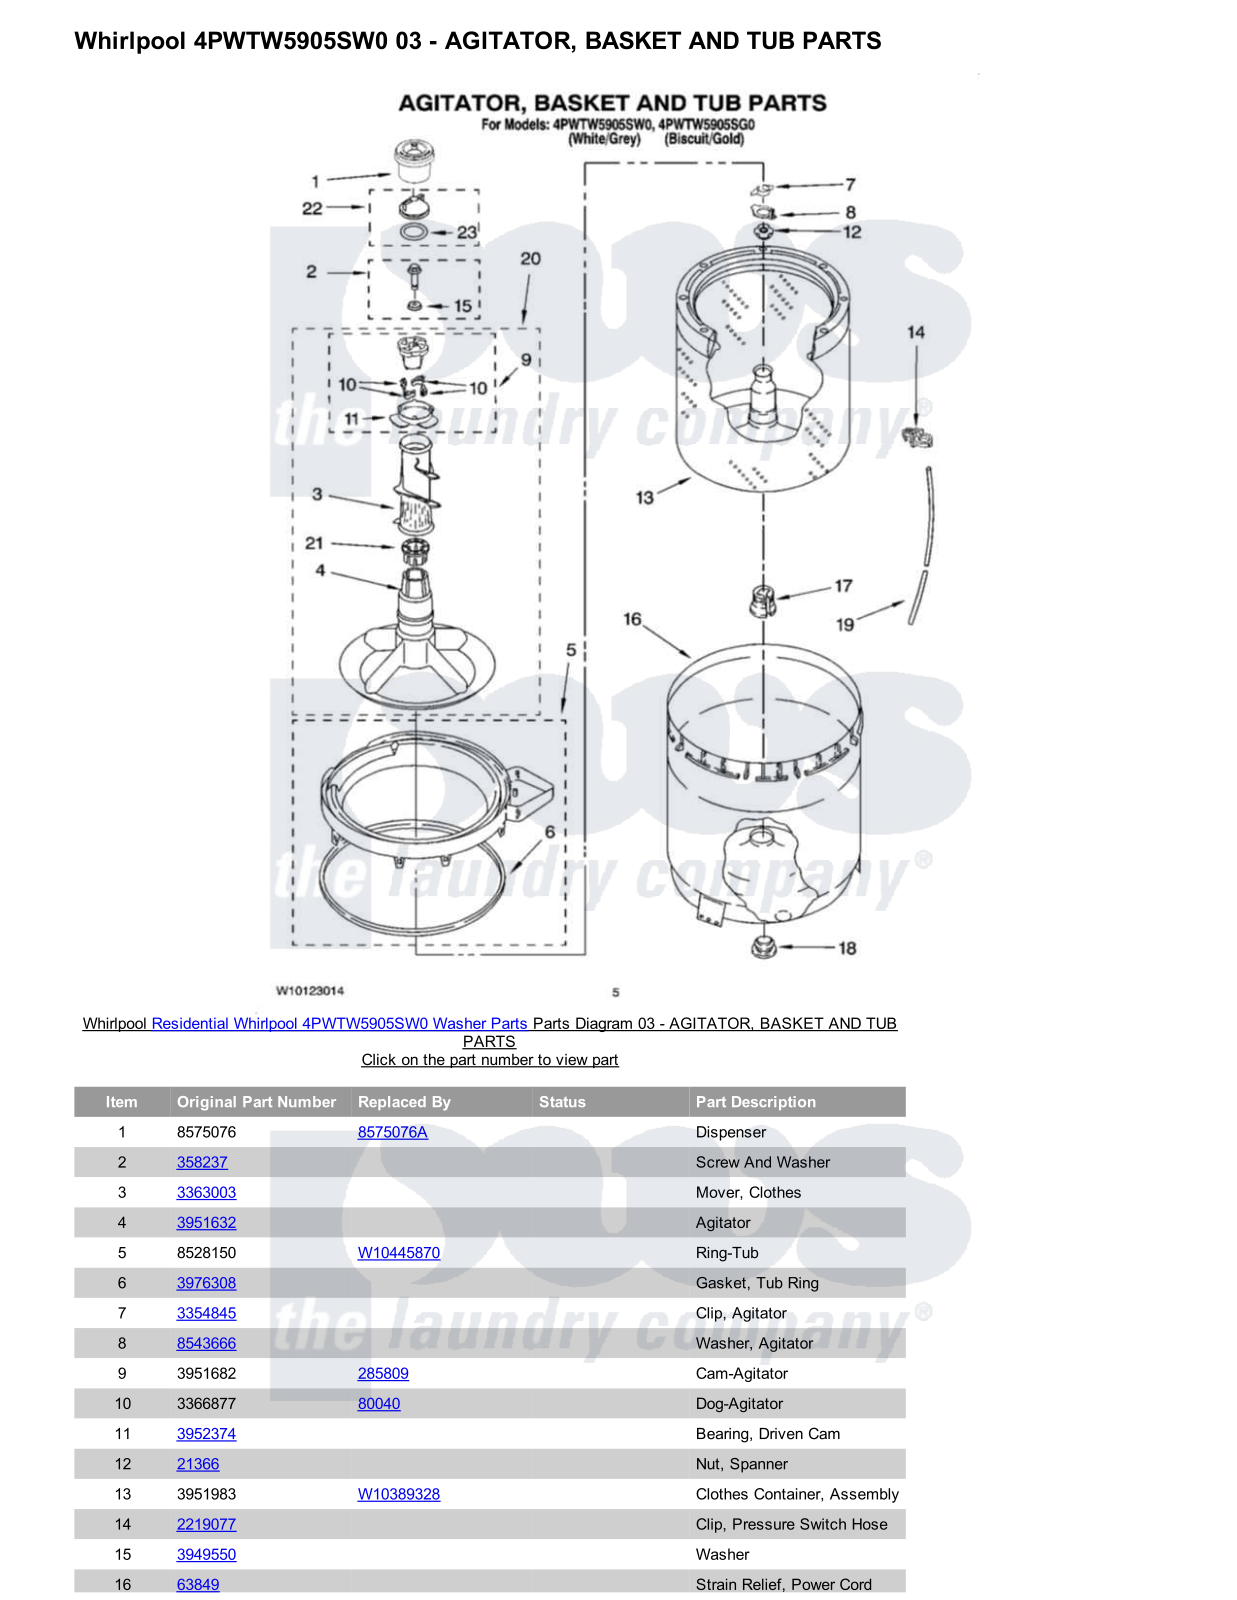 Whirlpool 4PWTW5905SW0 Parts Diagram